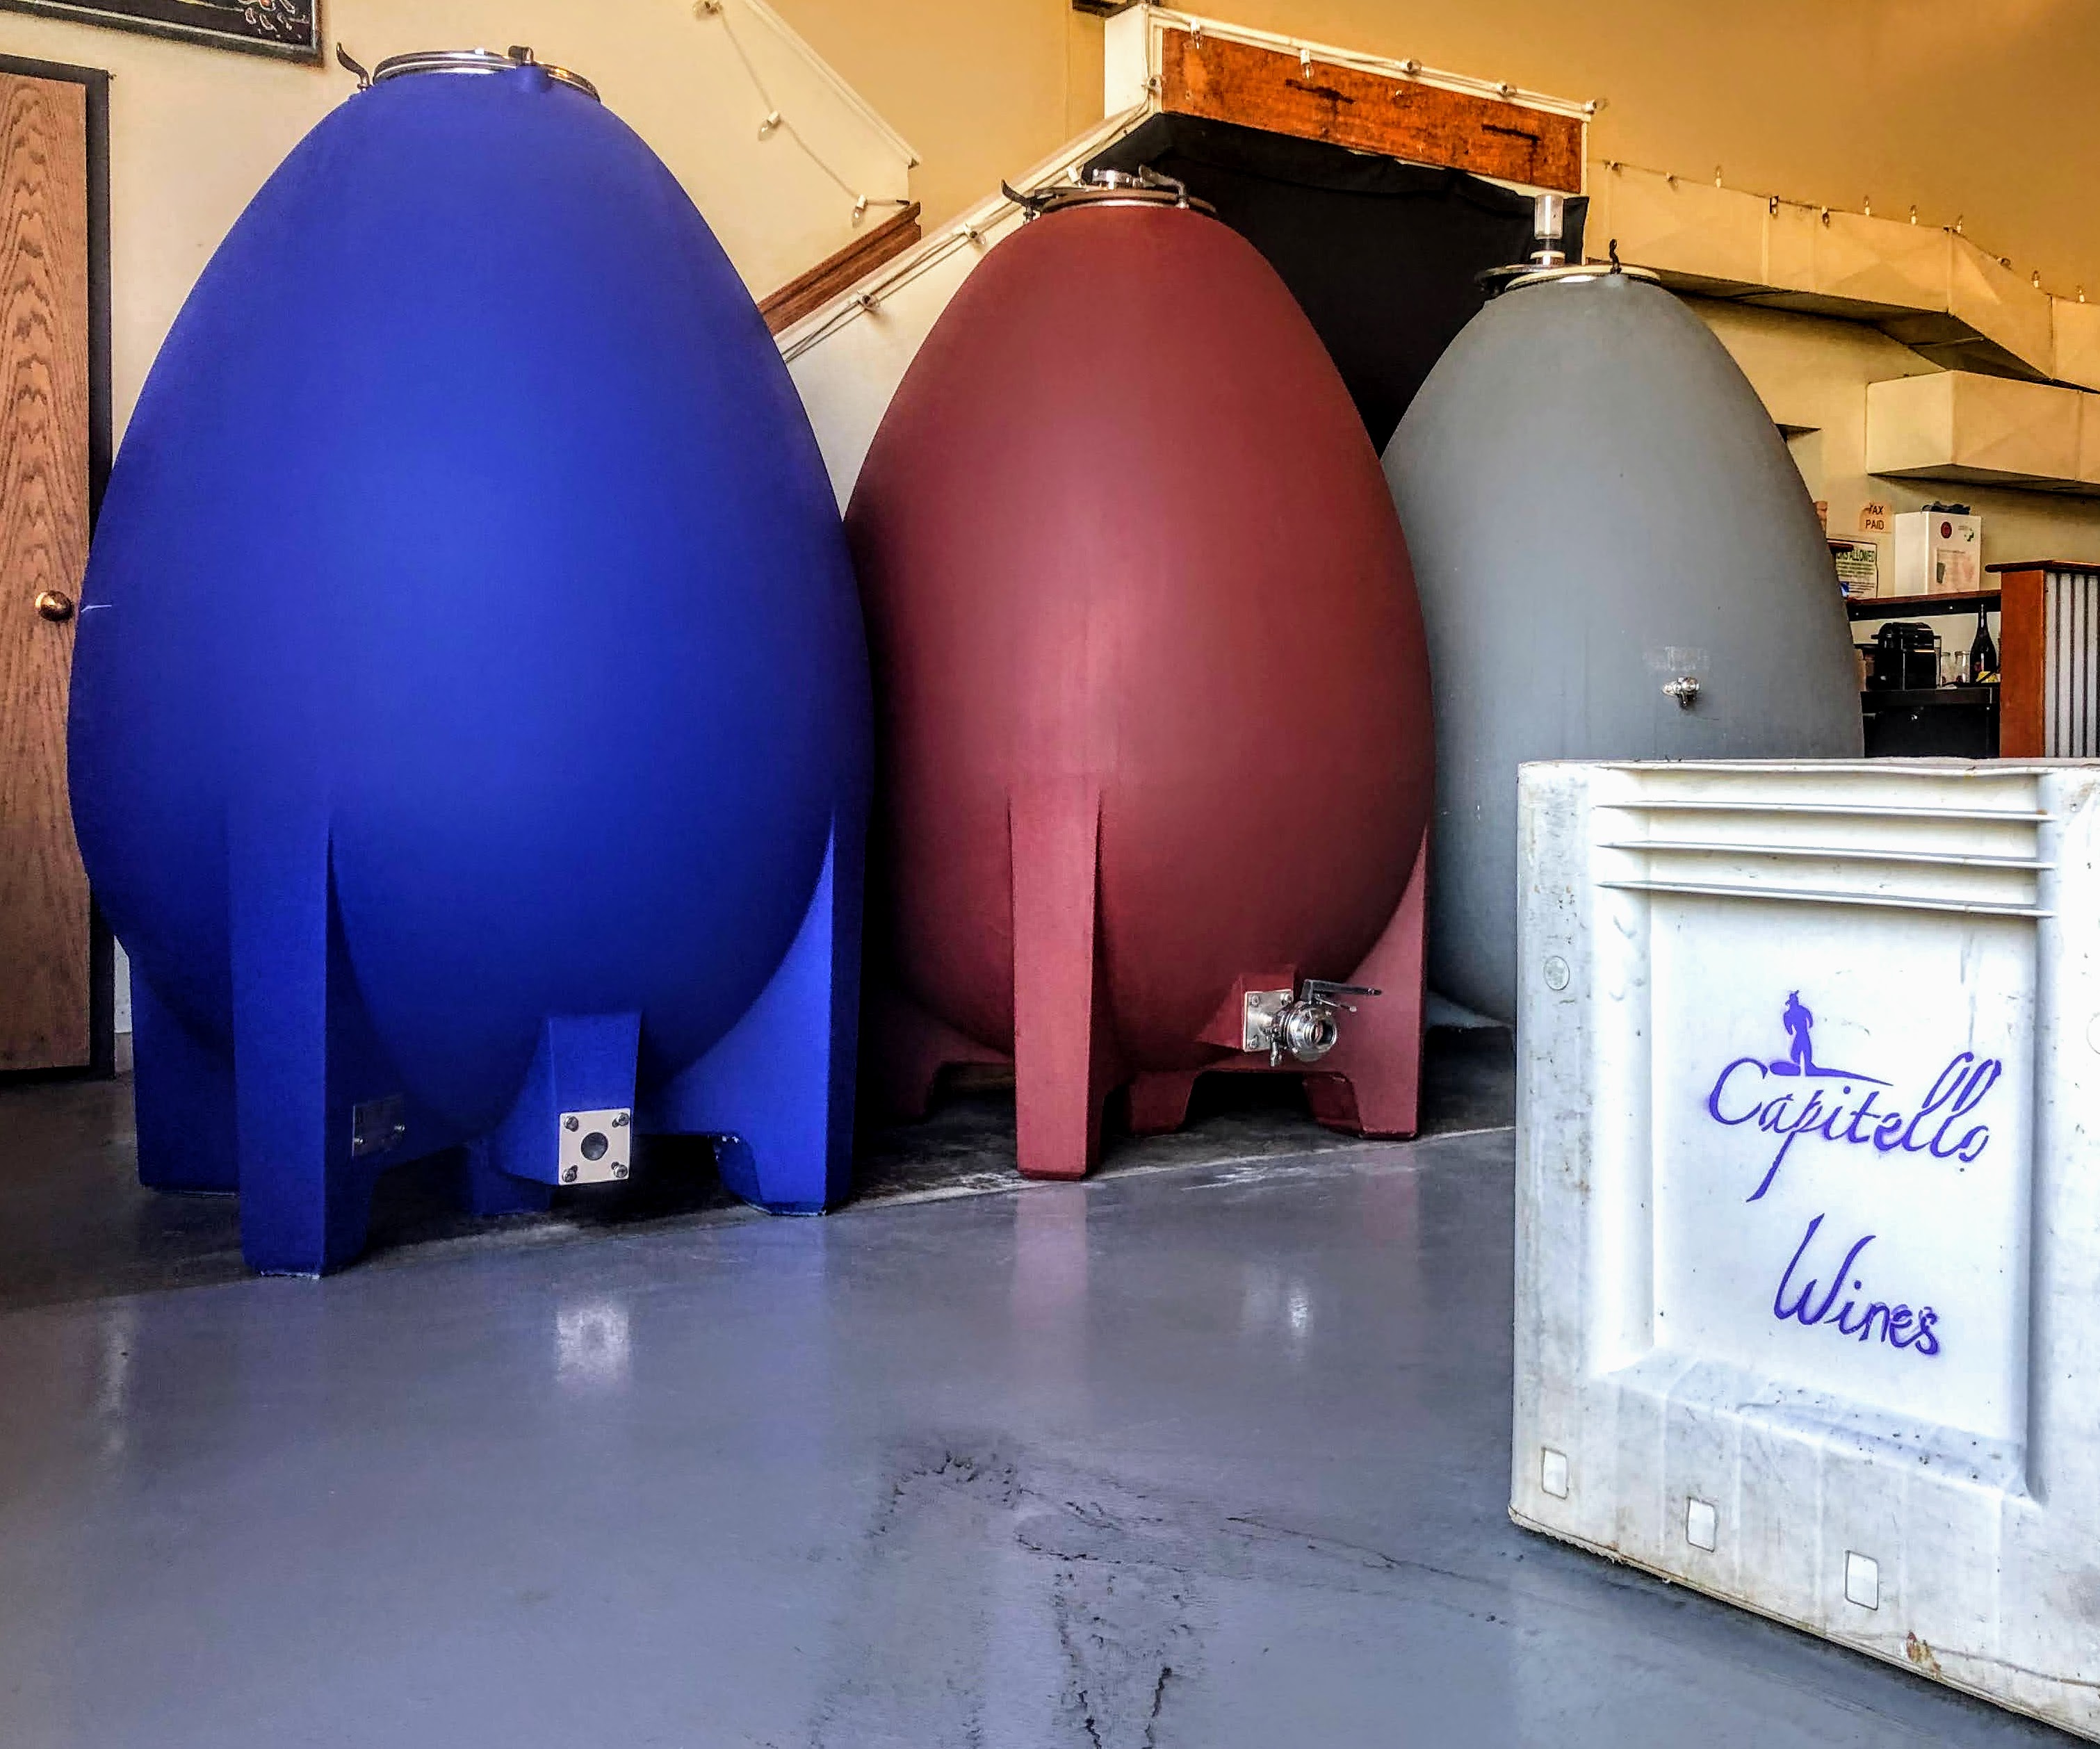 Three egg-shaped wine vats.